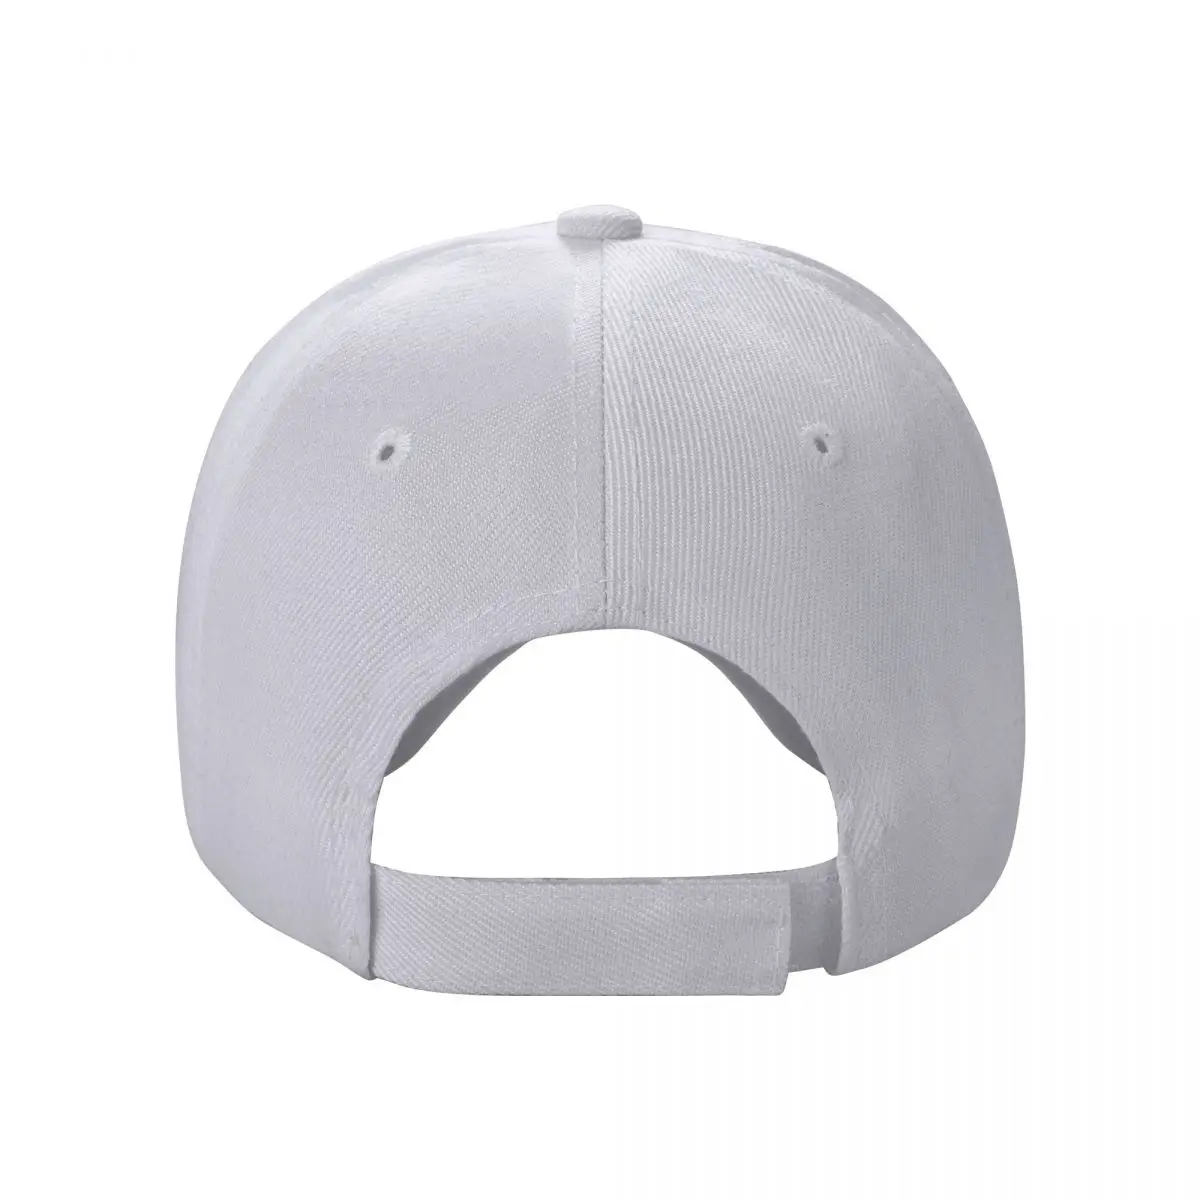 Наденьте кепку Demodog, бейсболку, широкополую шляпу, хип-хоп шляпу, мужскую и женскую шляпу